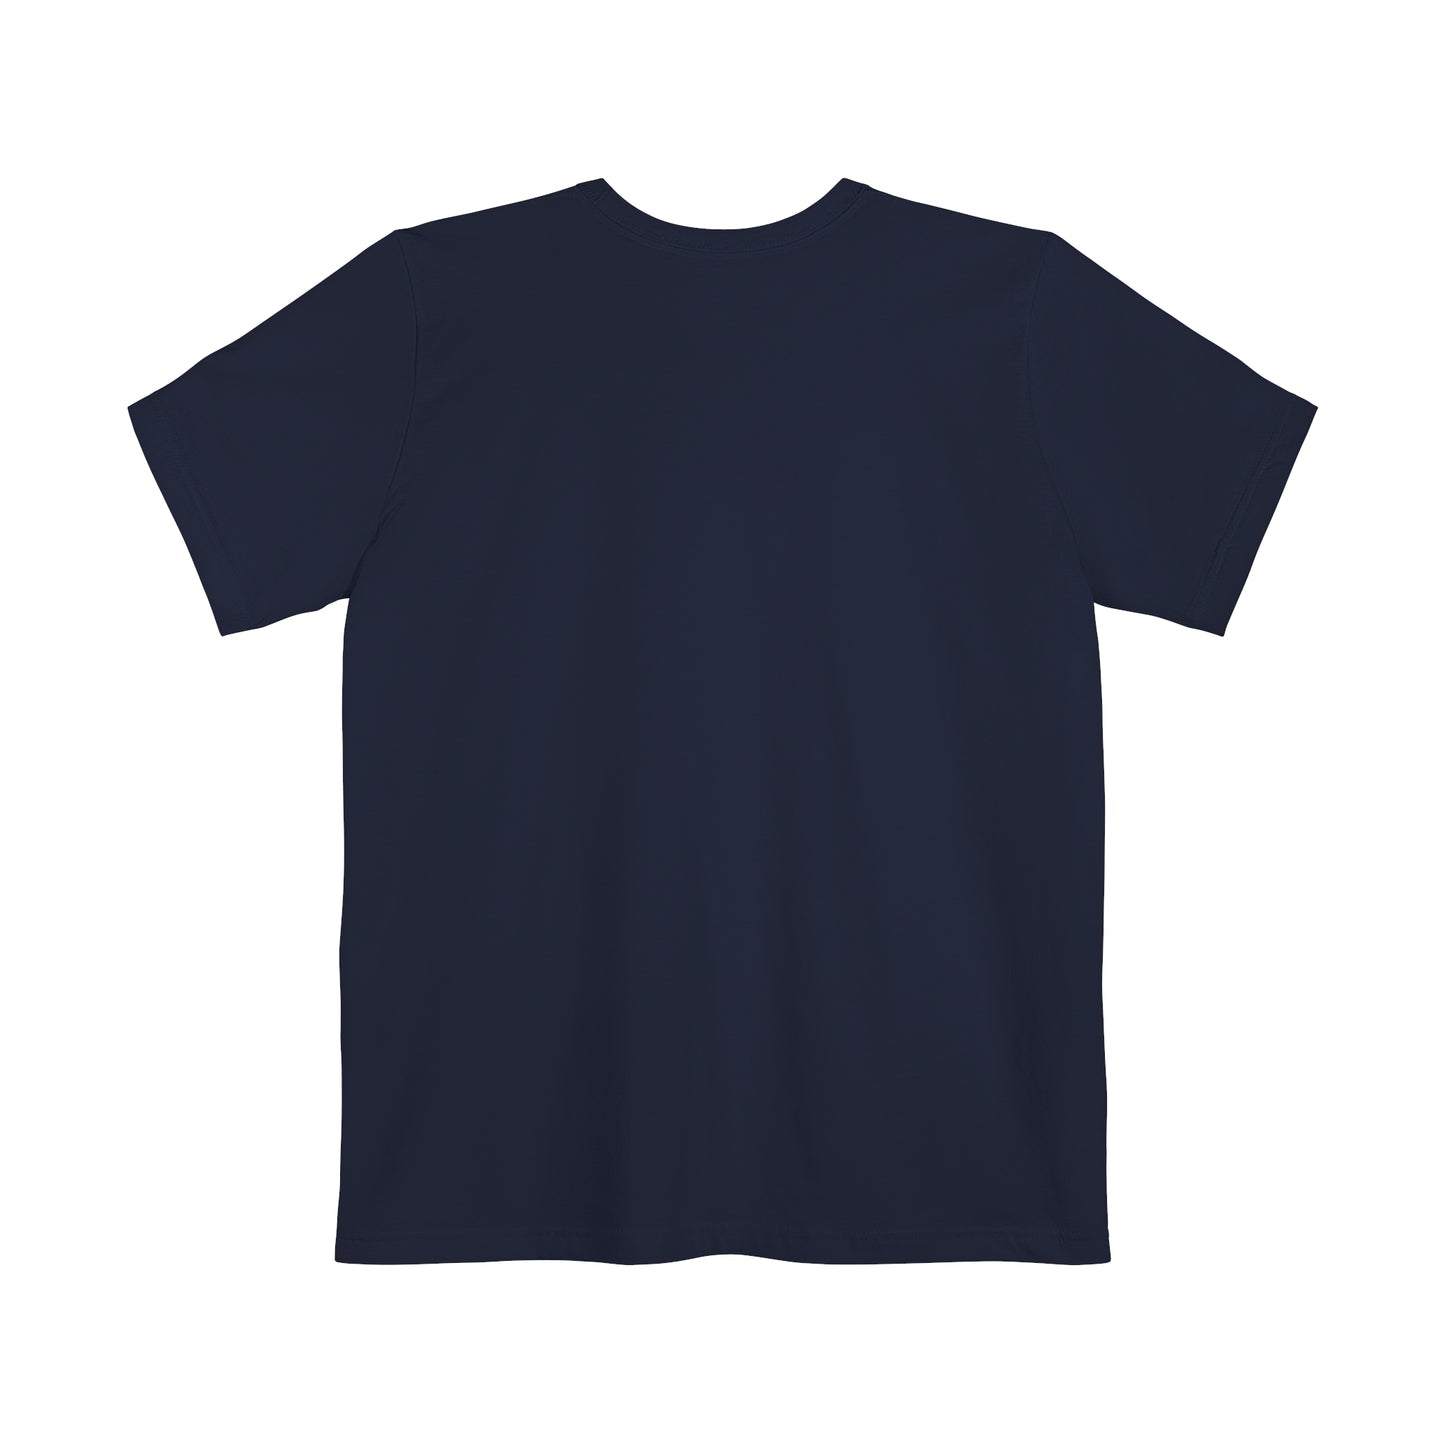 Unisex Pocket Tee, Bible Verse Shirt With Pocket, Short Sleeve T-Shirt With Pocket